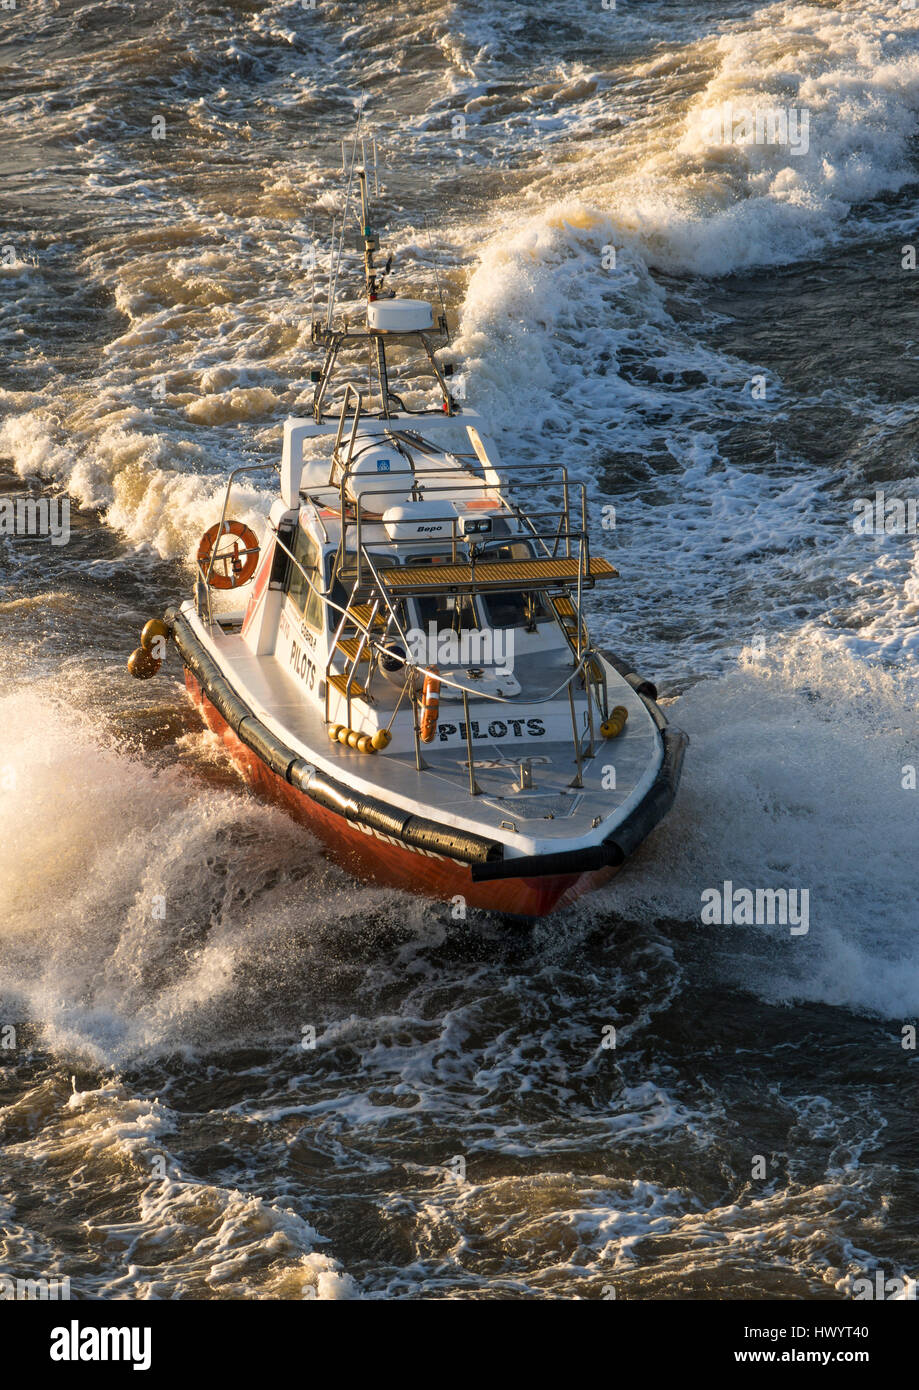 Pilot Boat, kommt zu versenden um Pilot, Montevideo, Uruguay zu sammeln Stockfoto